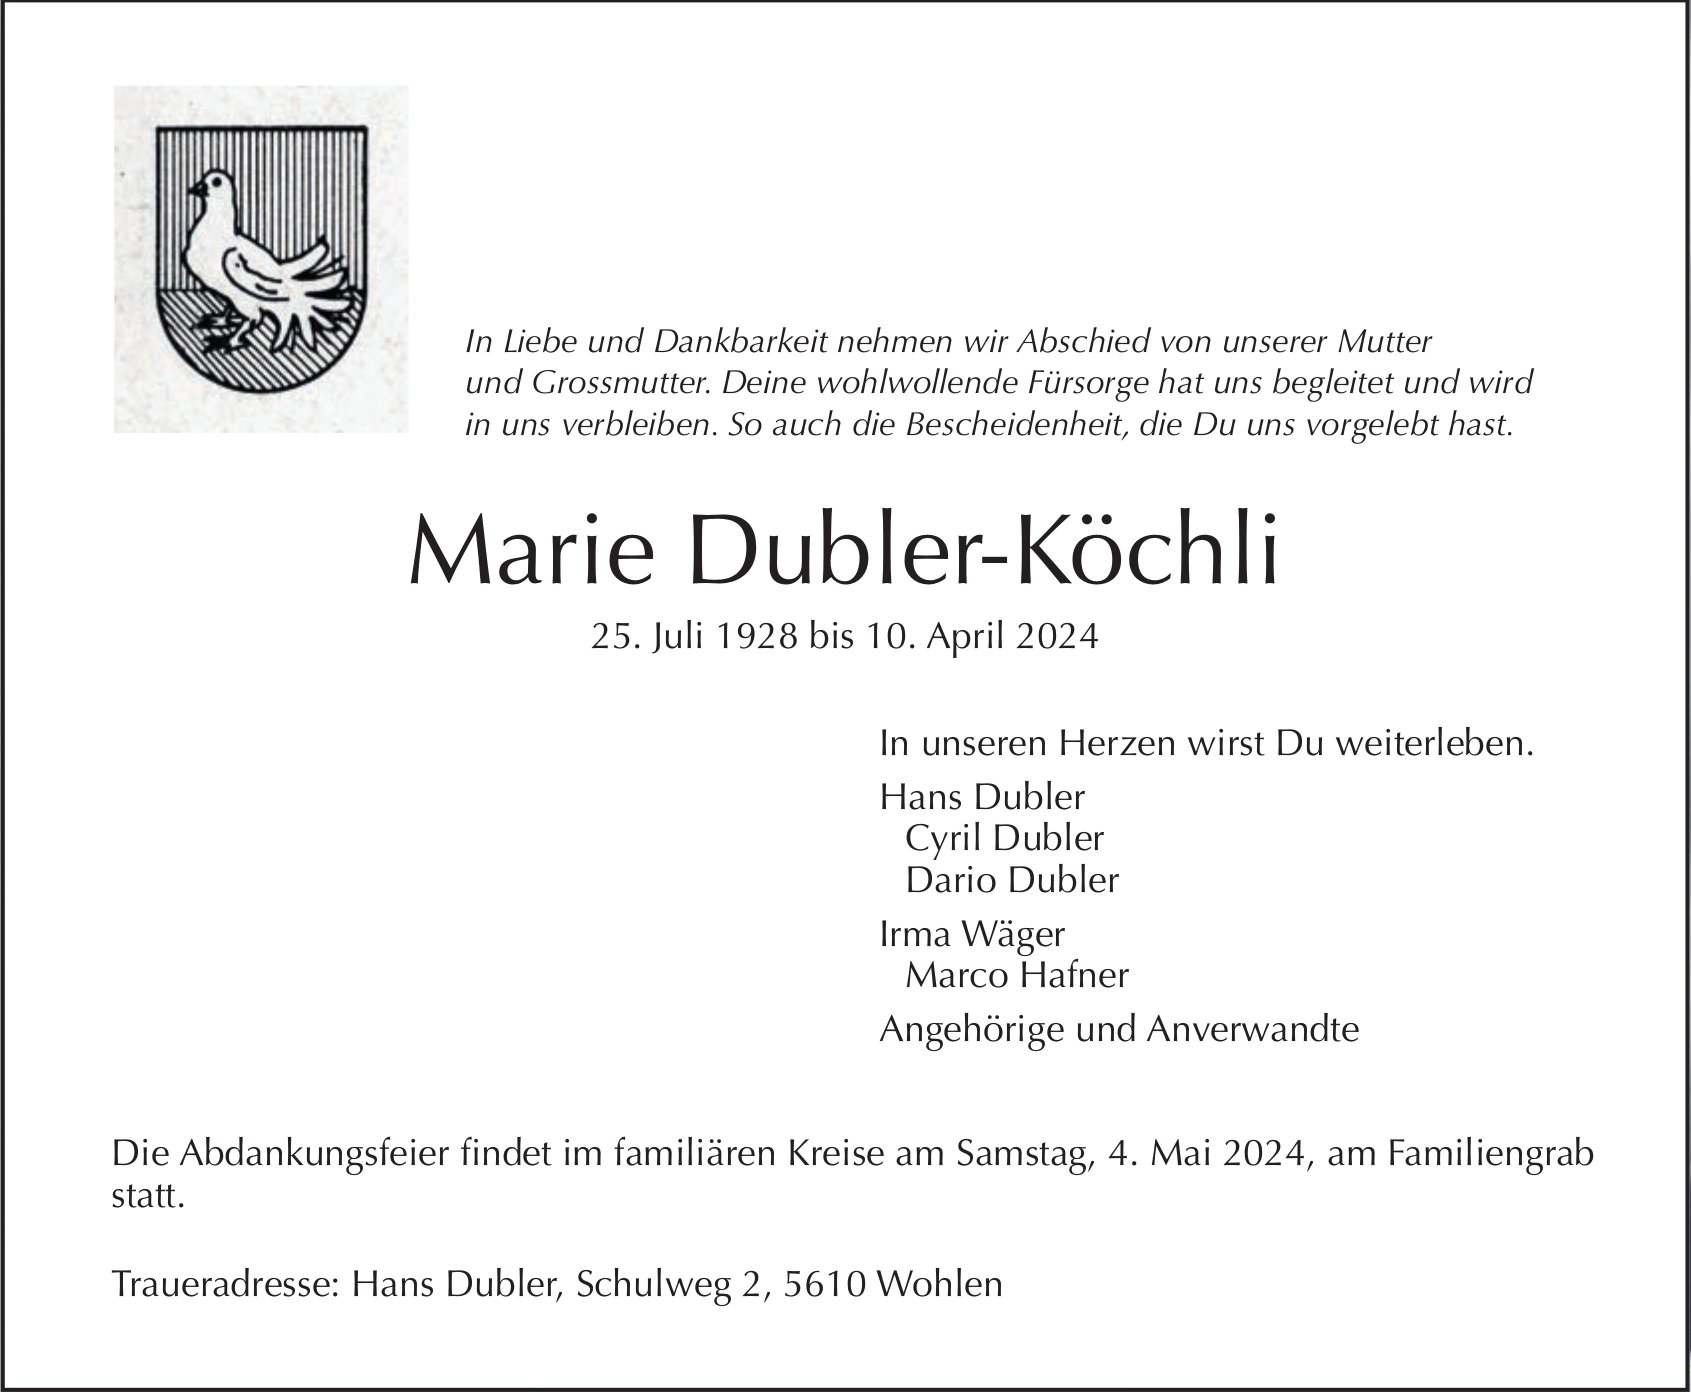 Marie Dubler-Köchli, April 2024 / TA